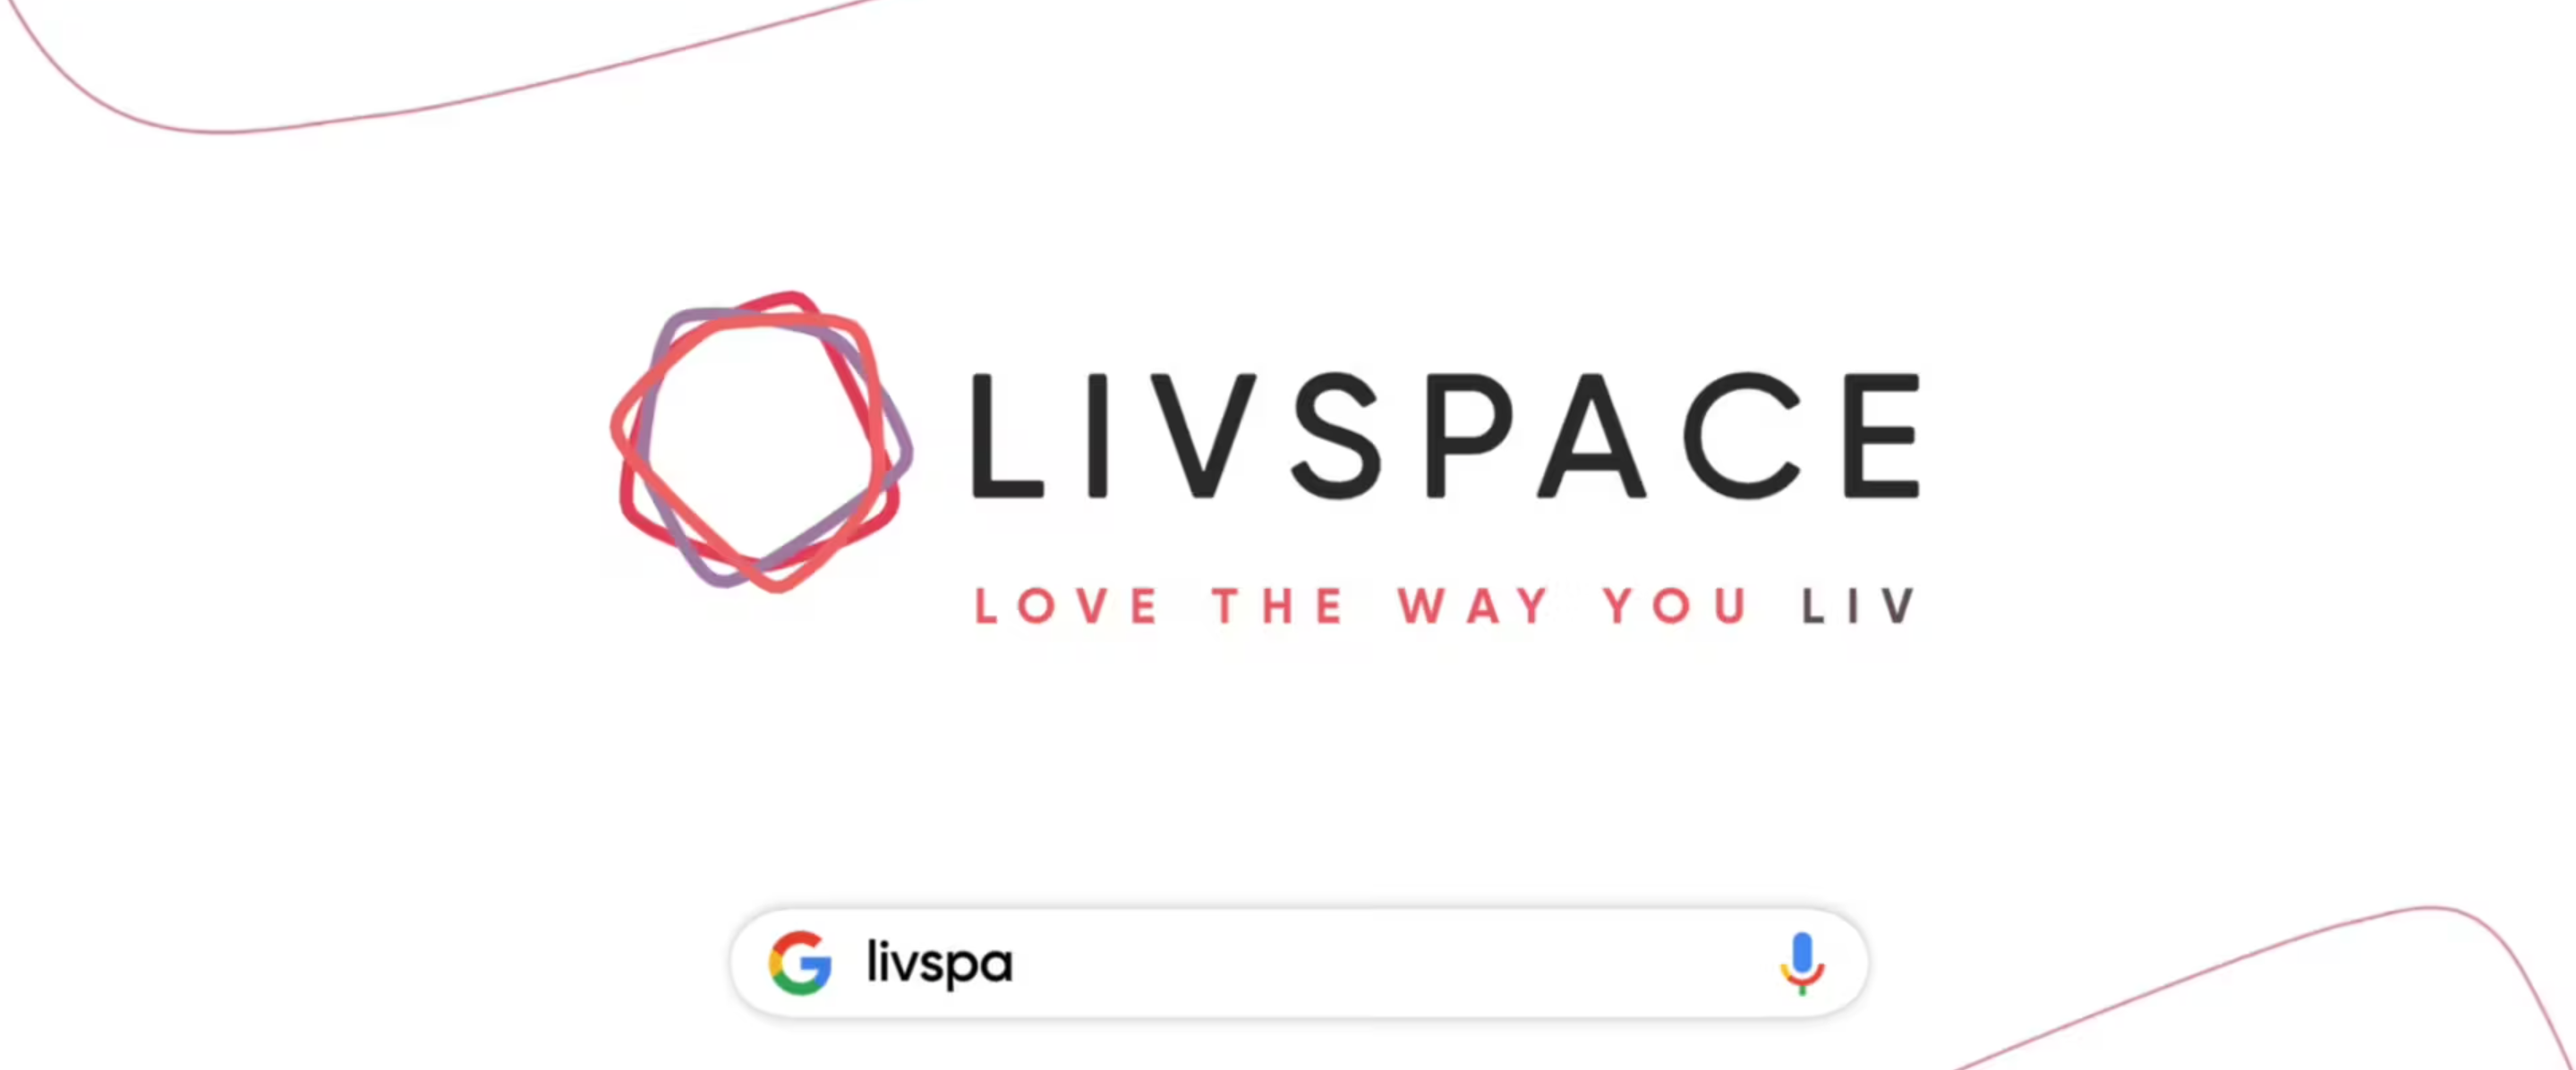 Livspace - Missing Scrunchy